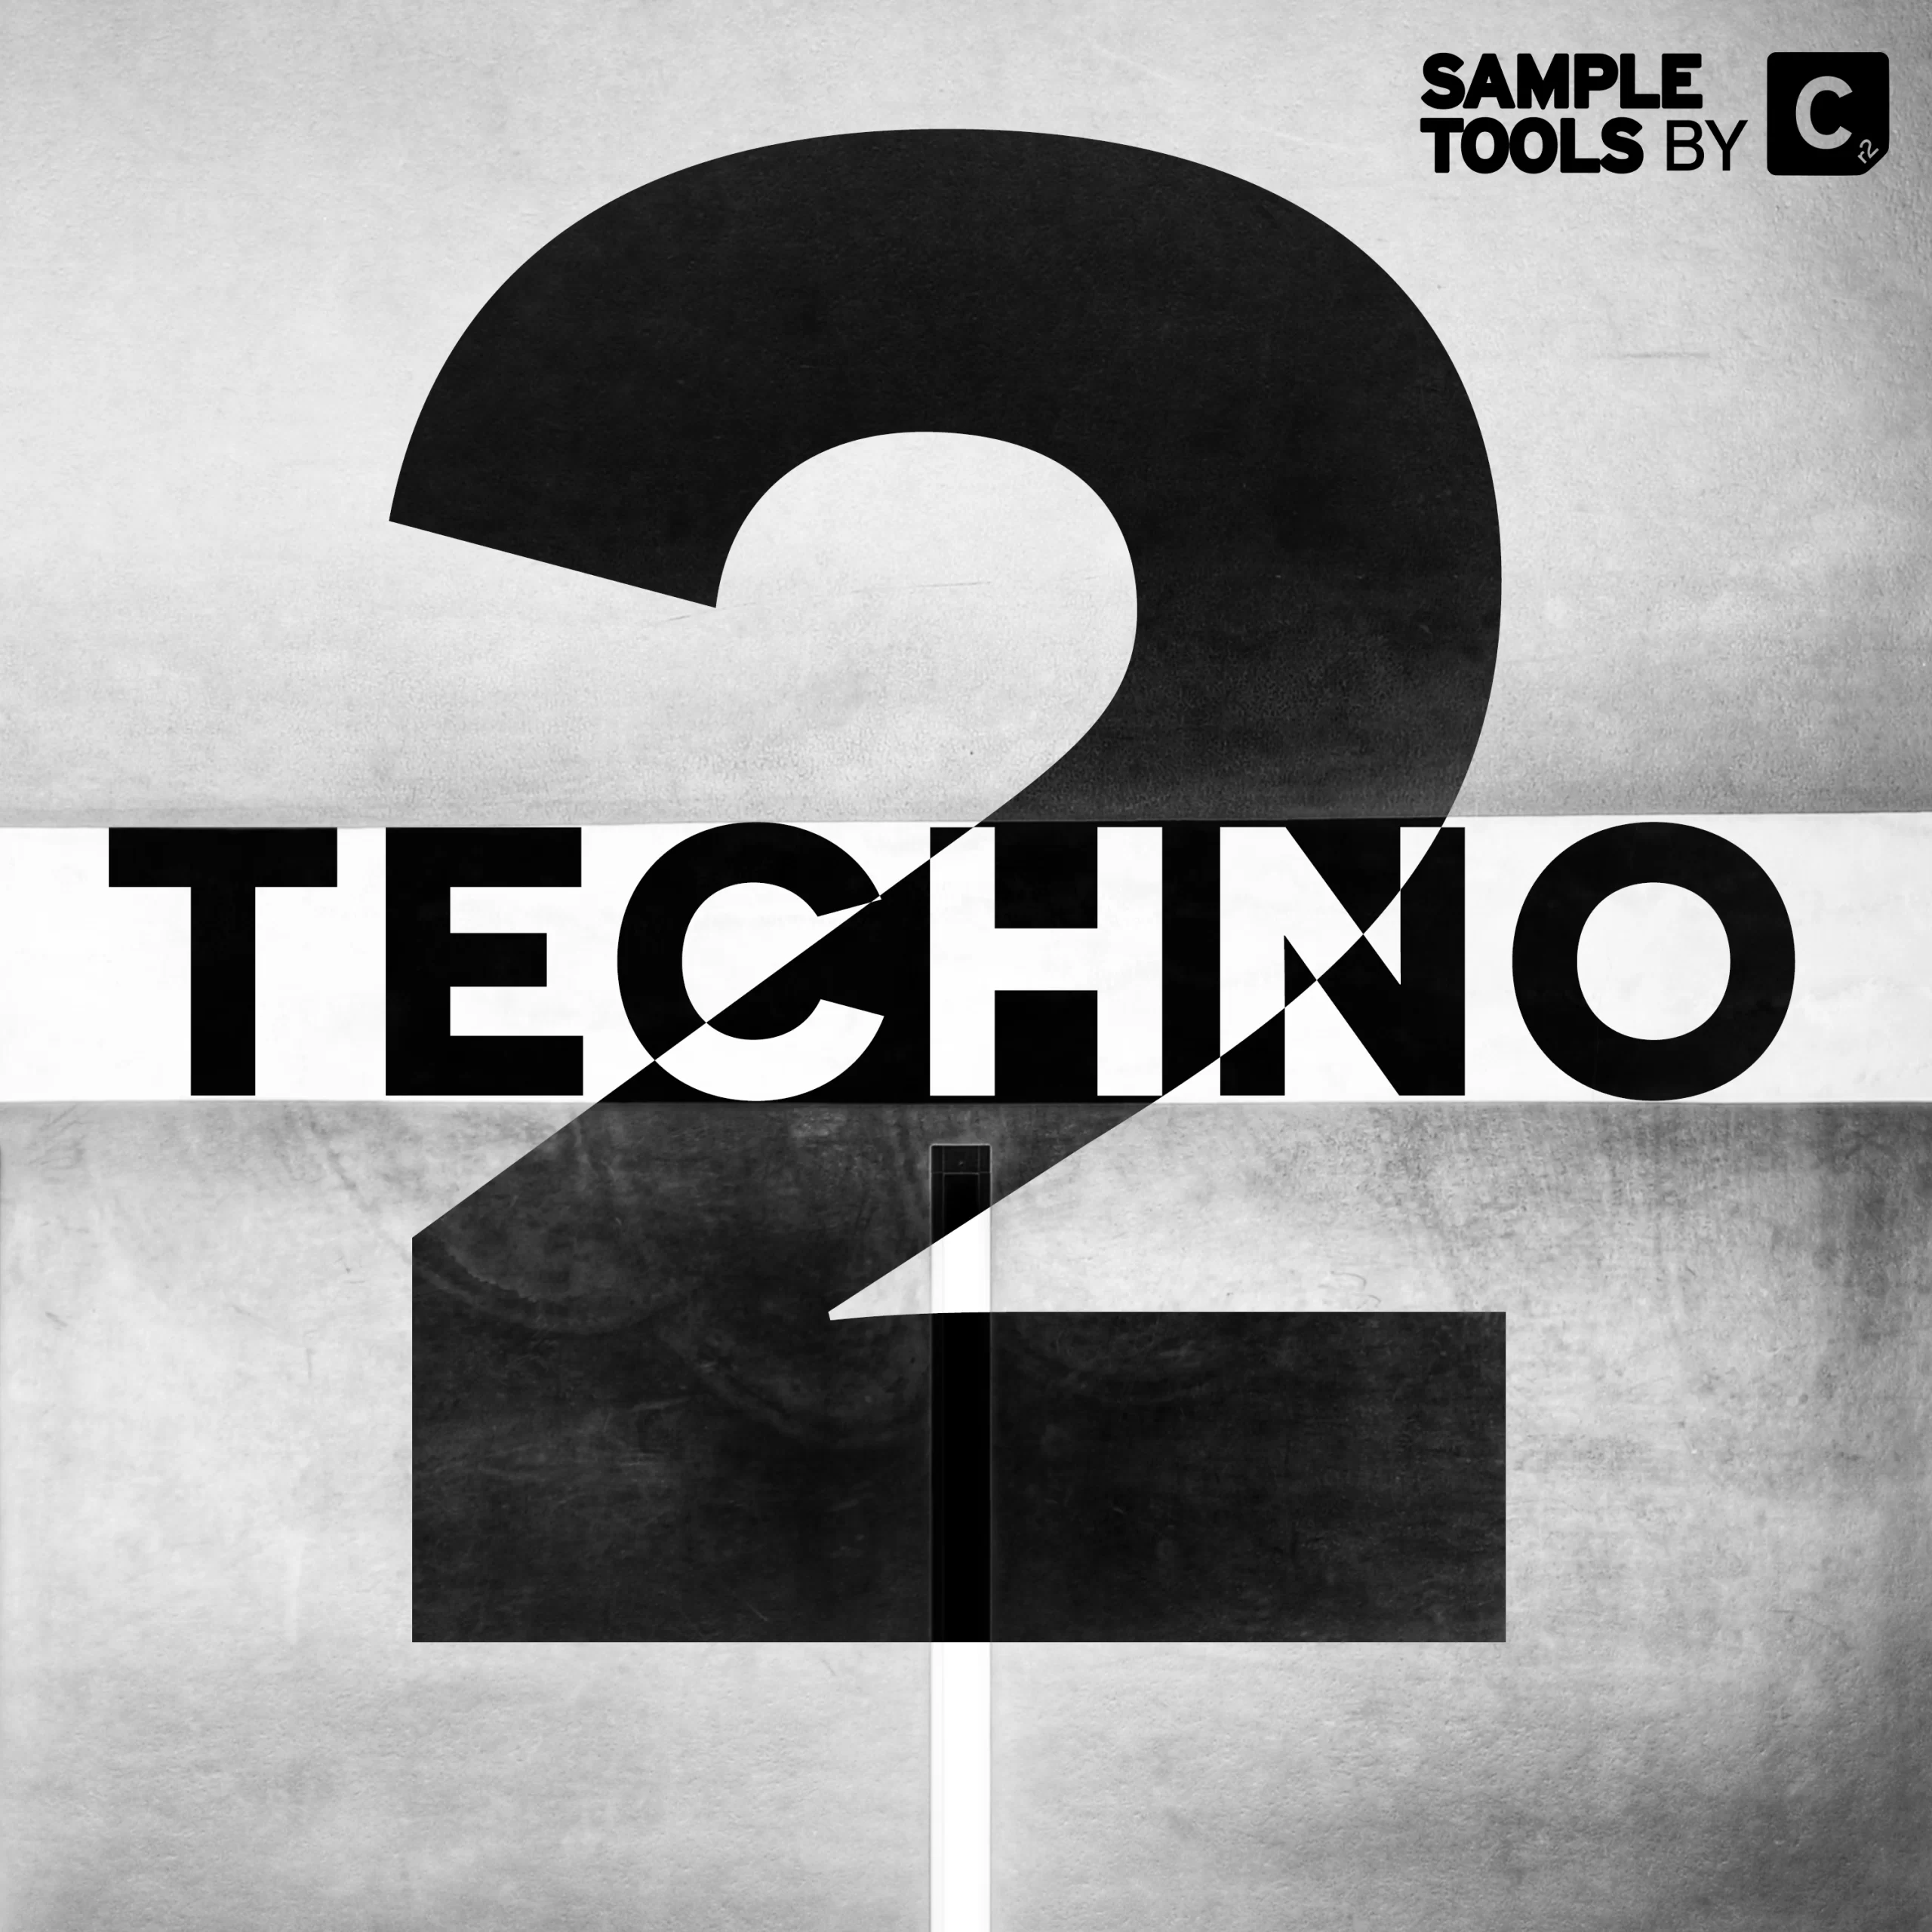 Sample tool. Techno 2 обложка. Techno Tools. Record Techno картинки. Tools.by.